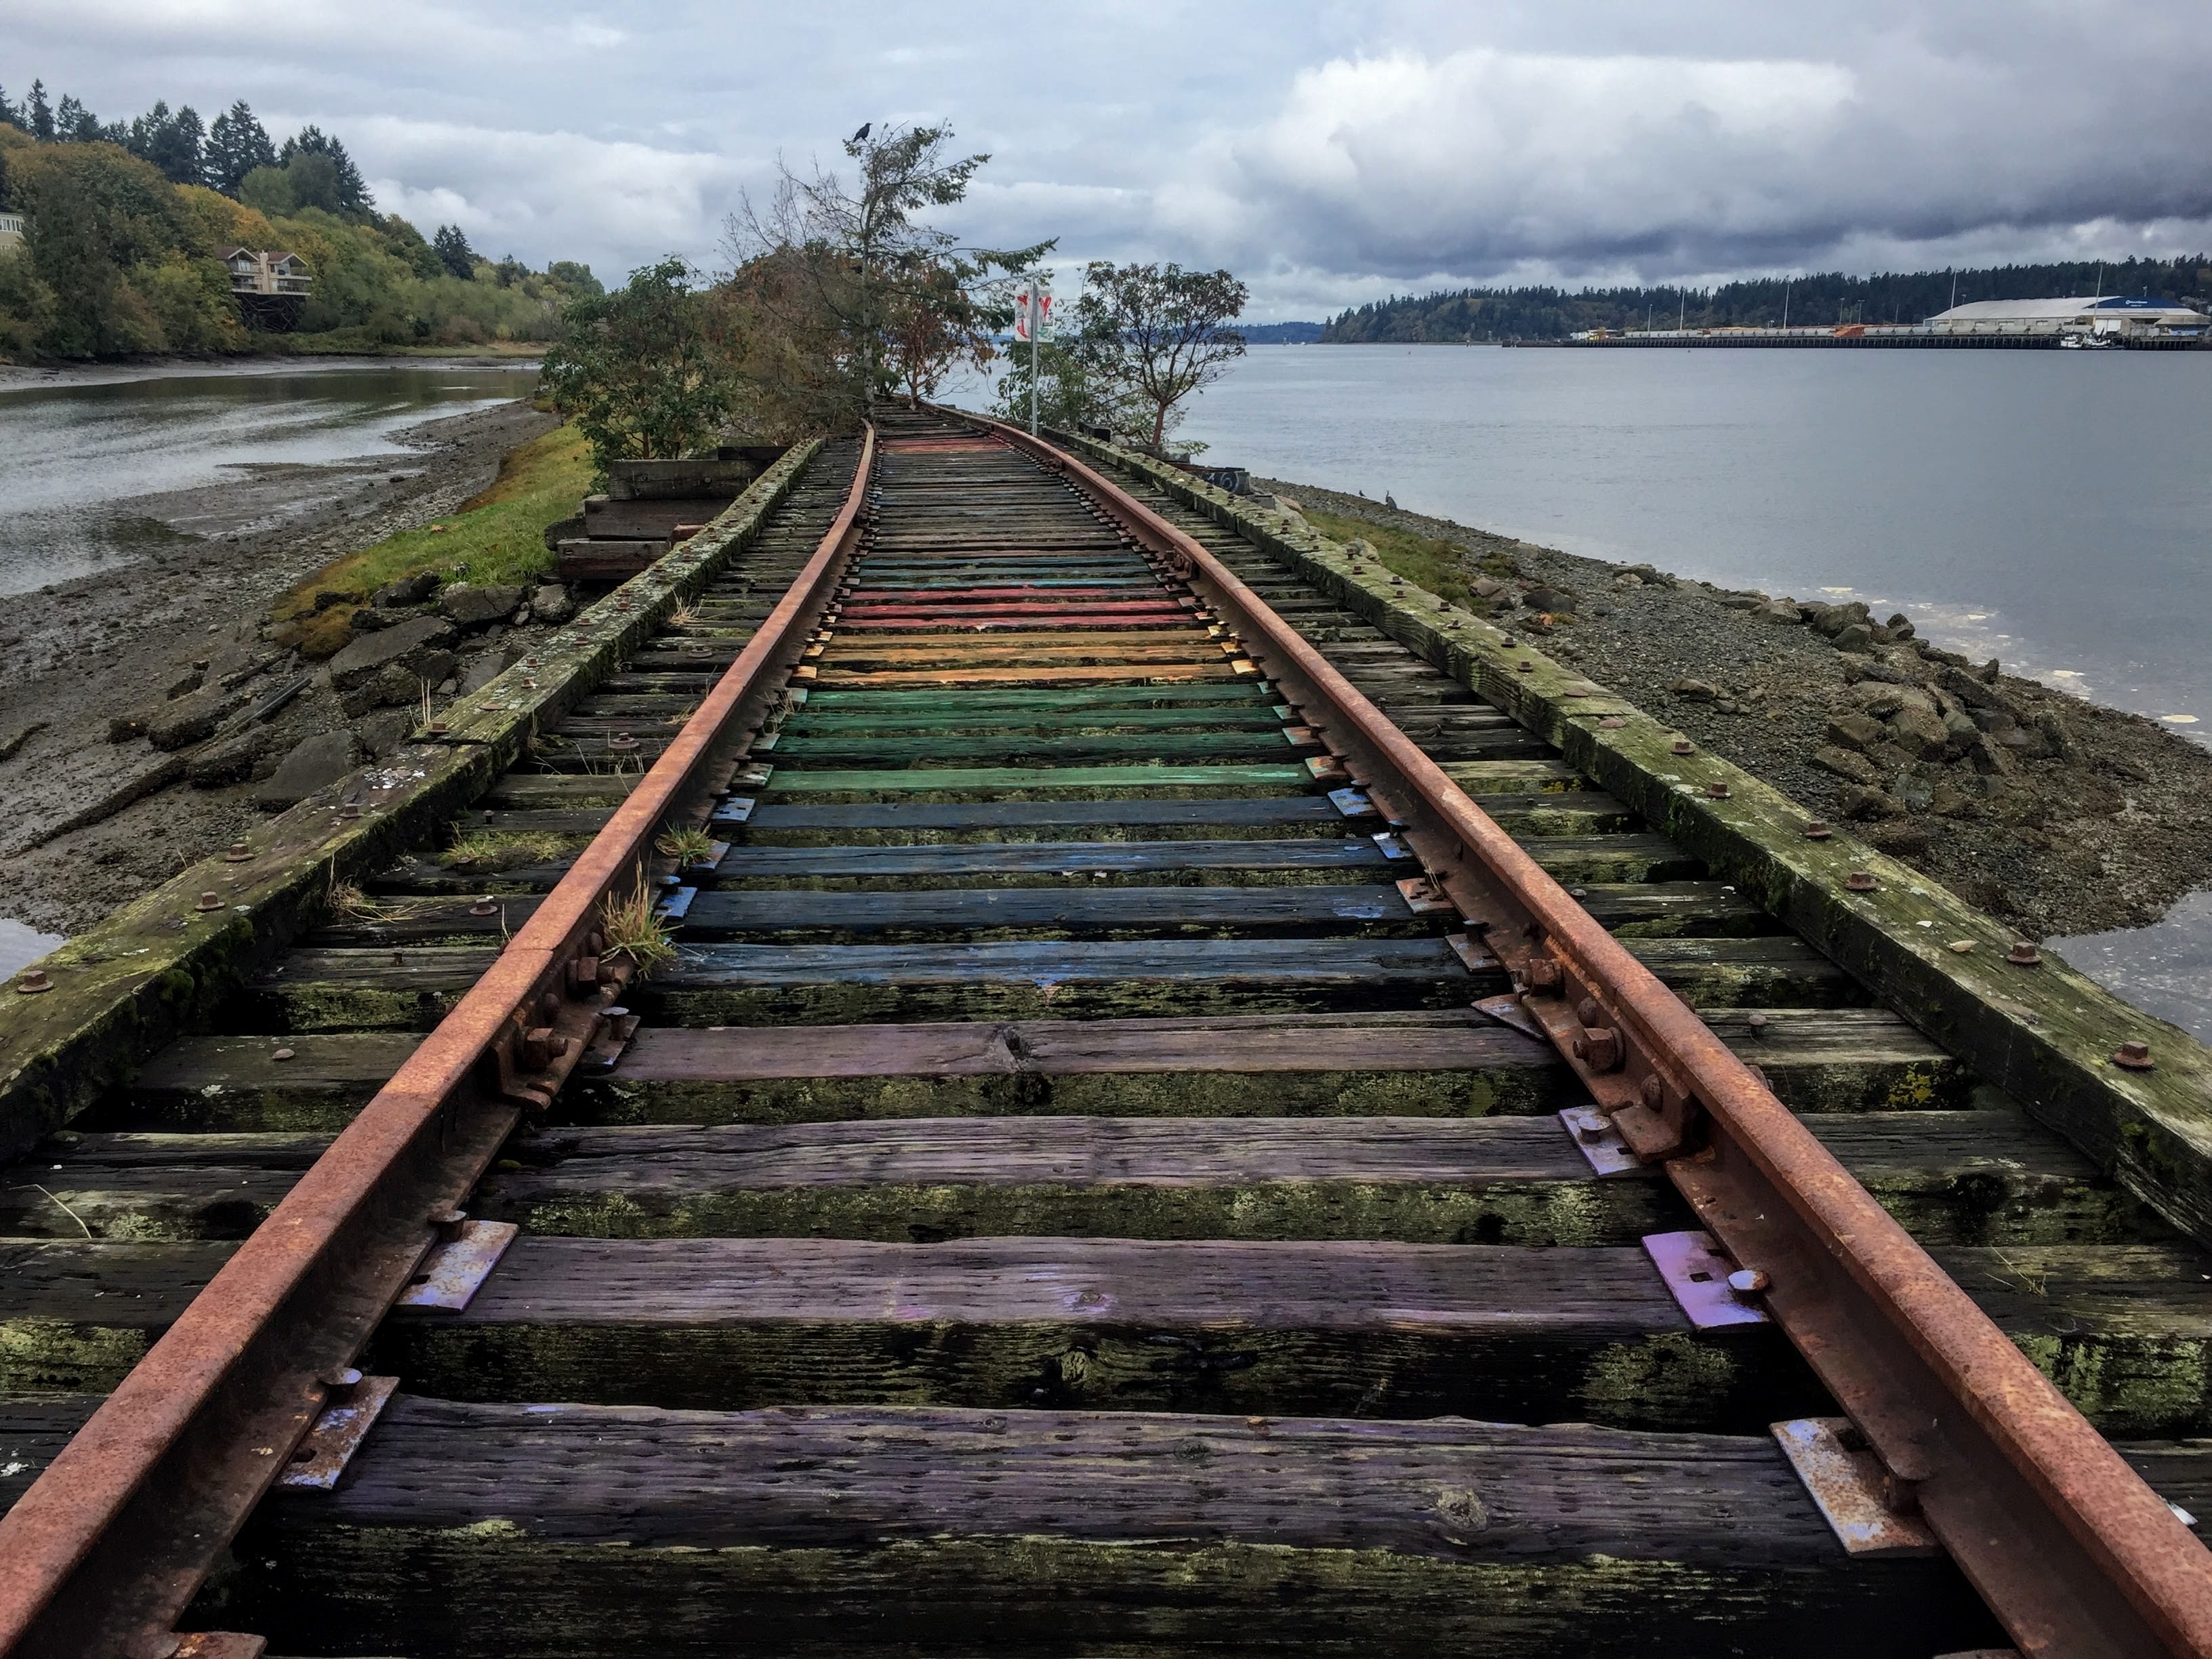 Abandoned railroad tracks - Olympia, Wa - Album on Imgur